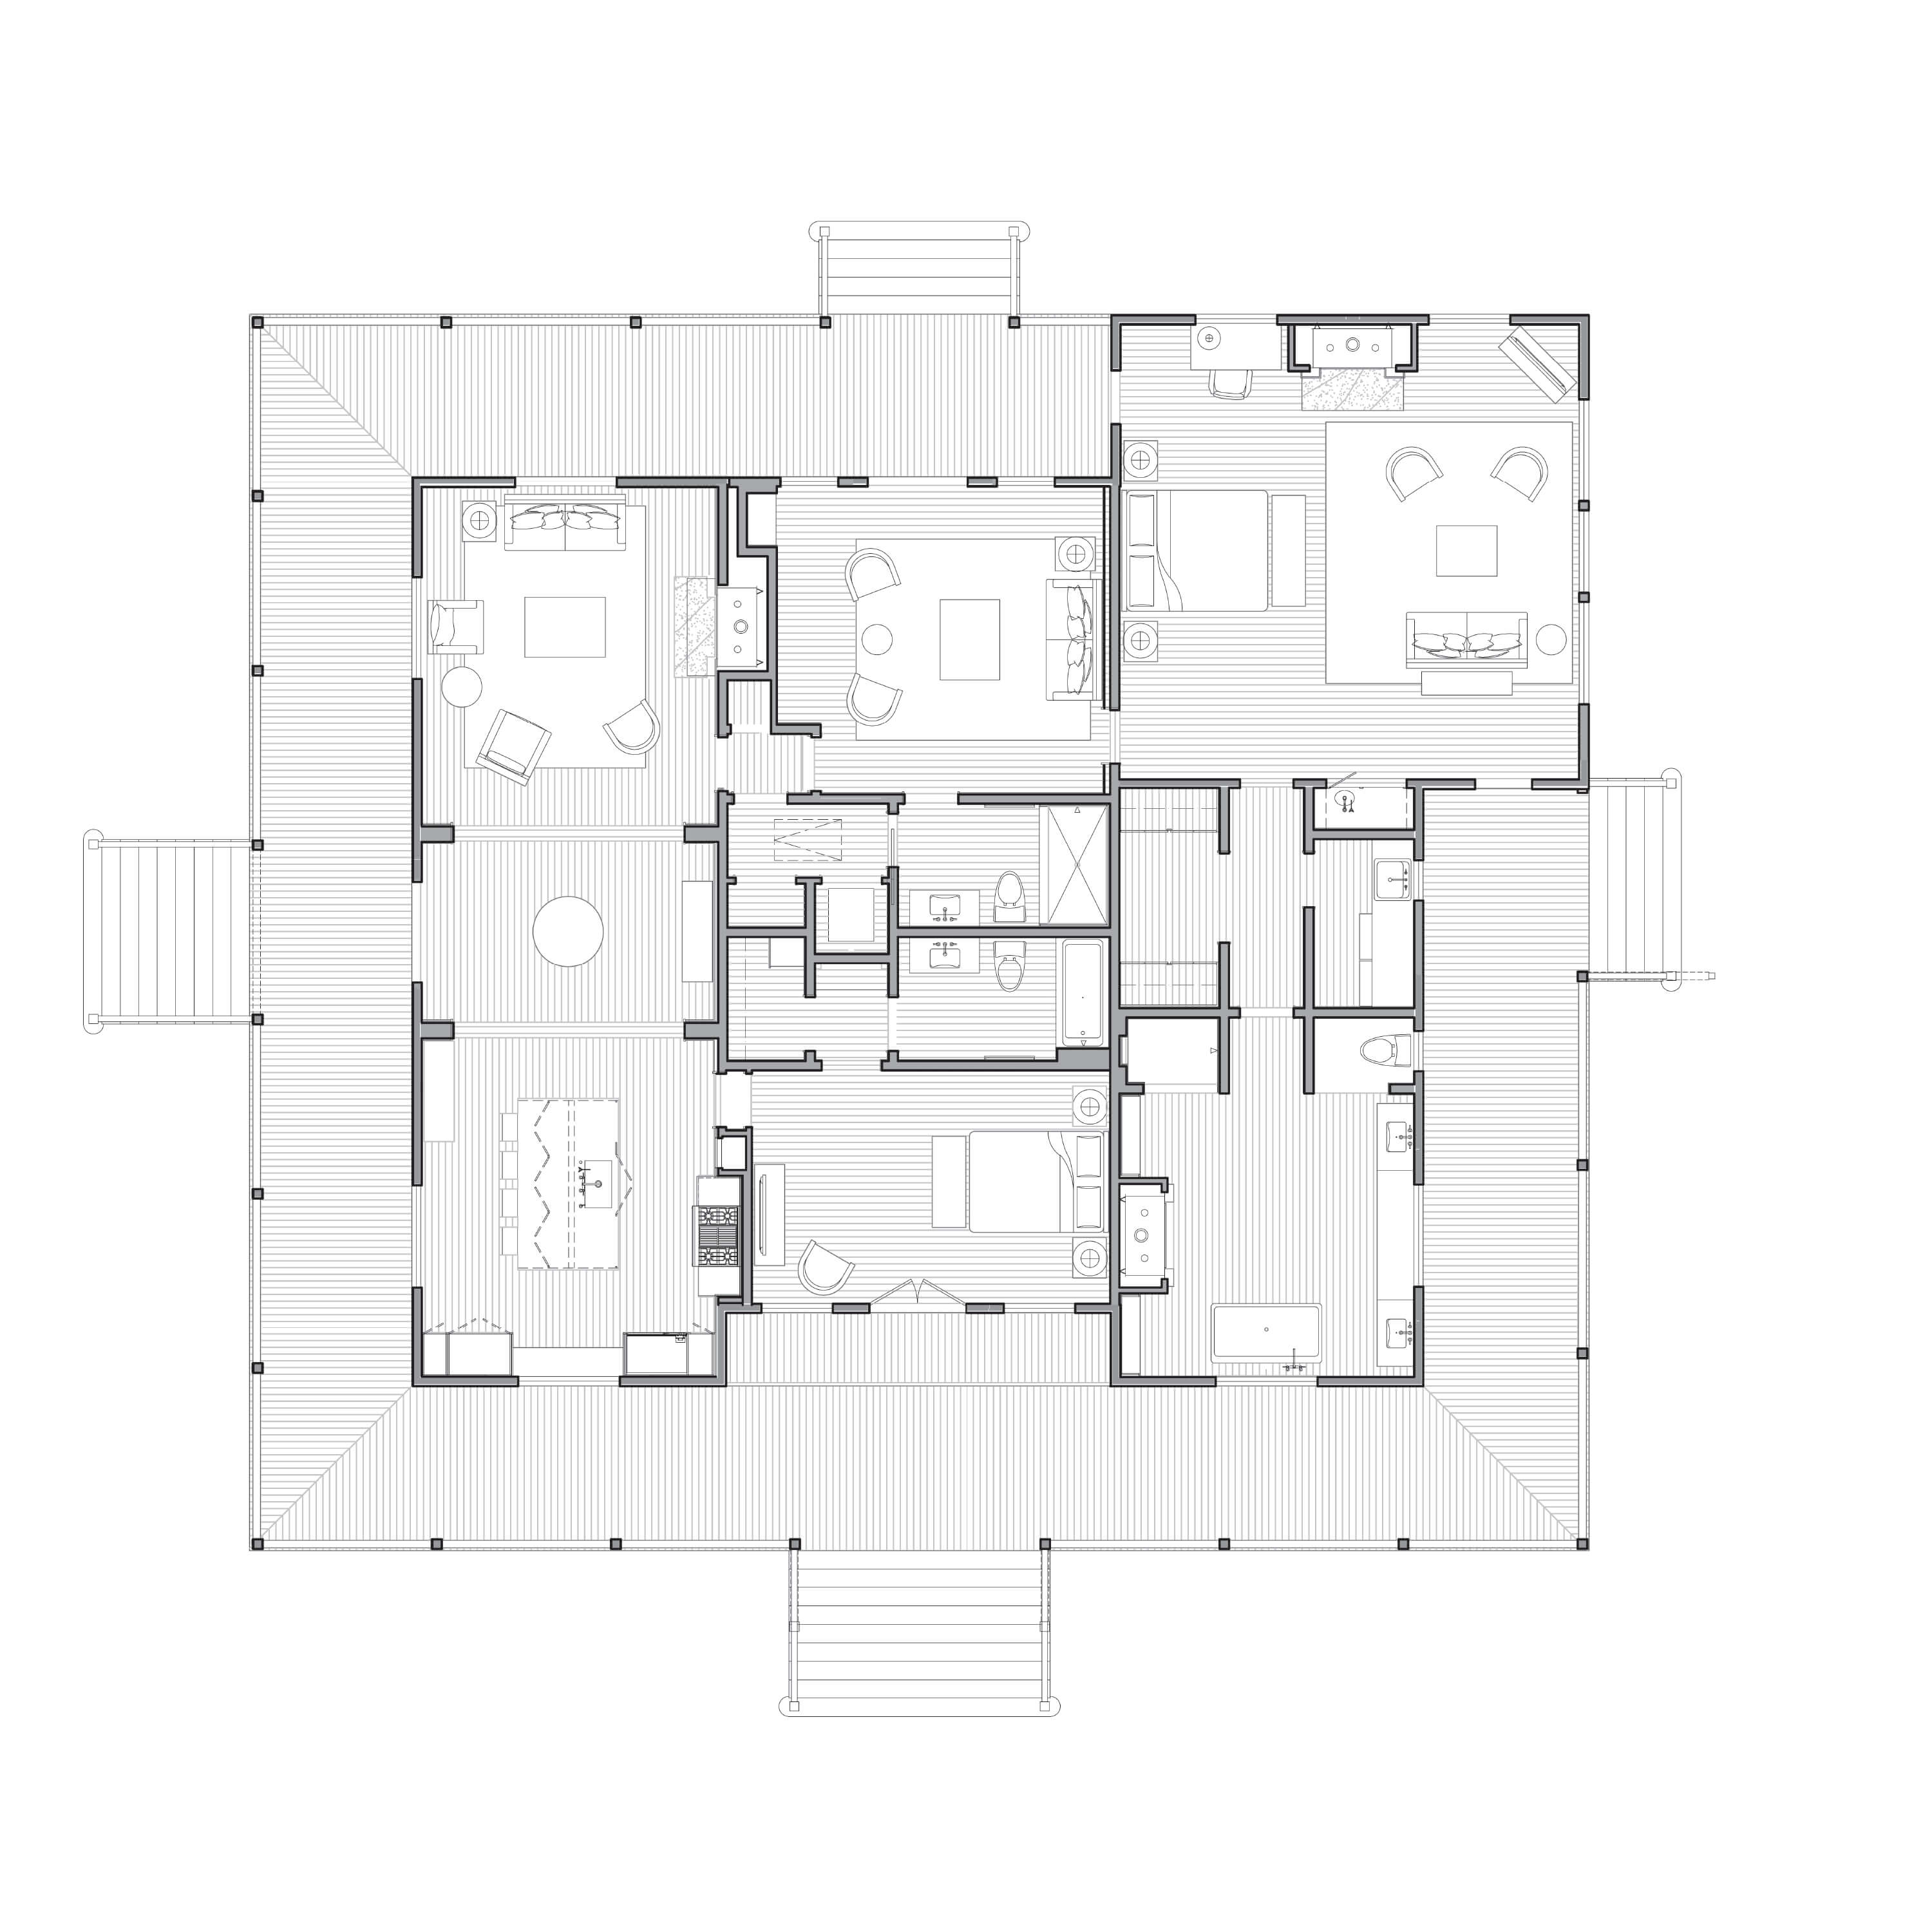 Cole House by Richard Beard of Richard Beard Architects